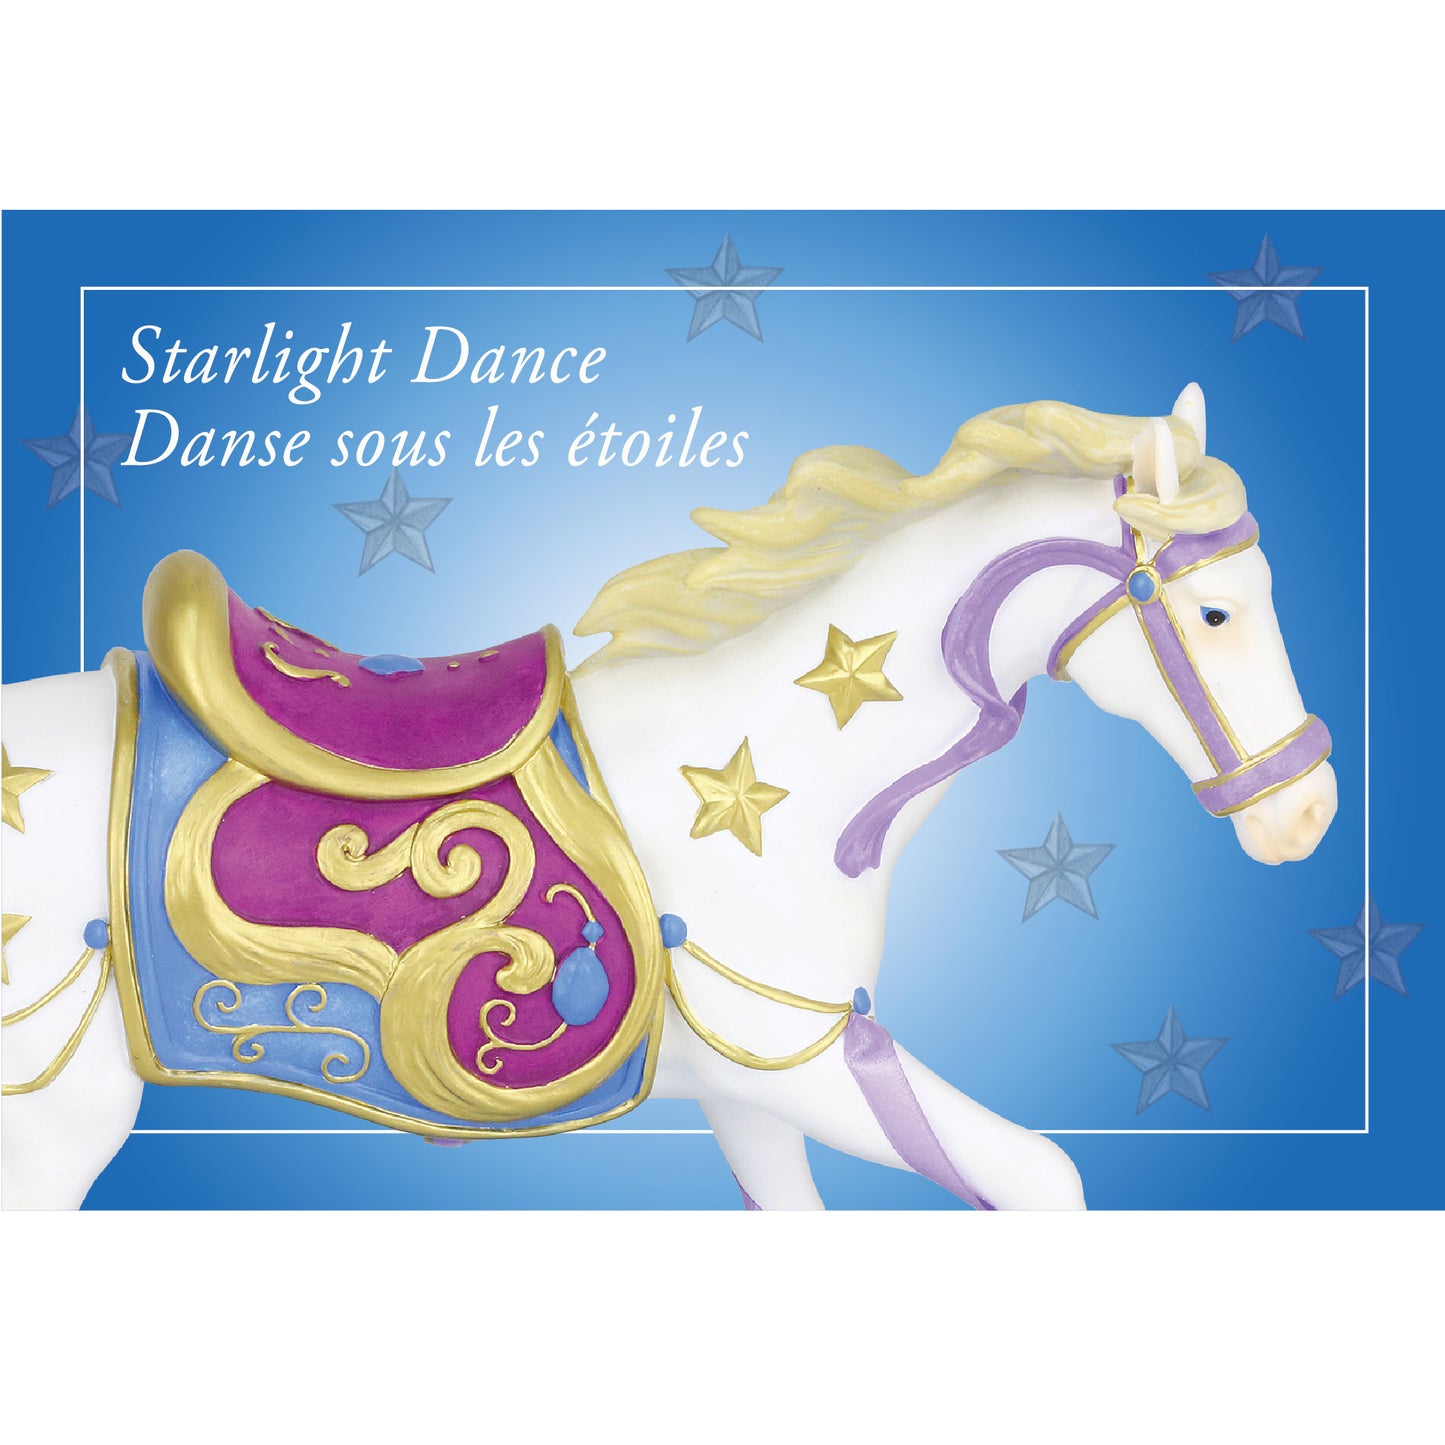 Starlight Dance - Standard Edition